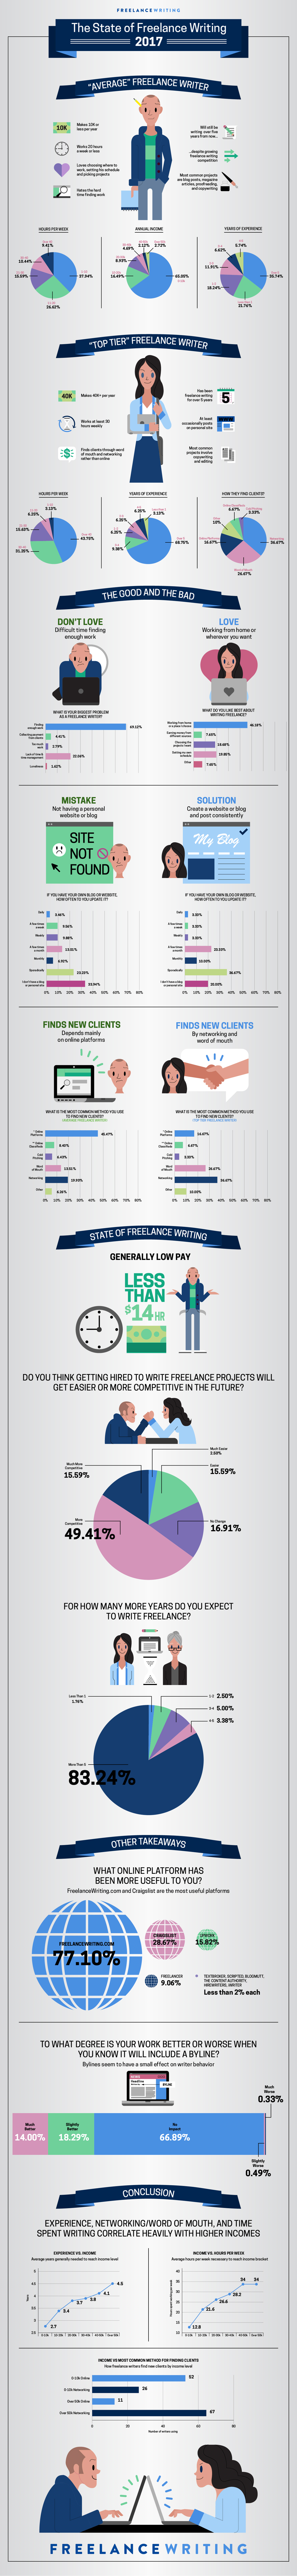 freelance-writing-infographic